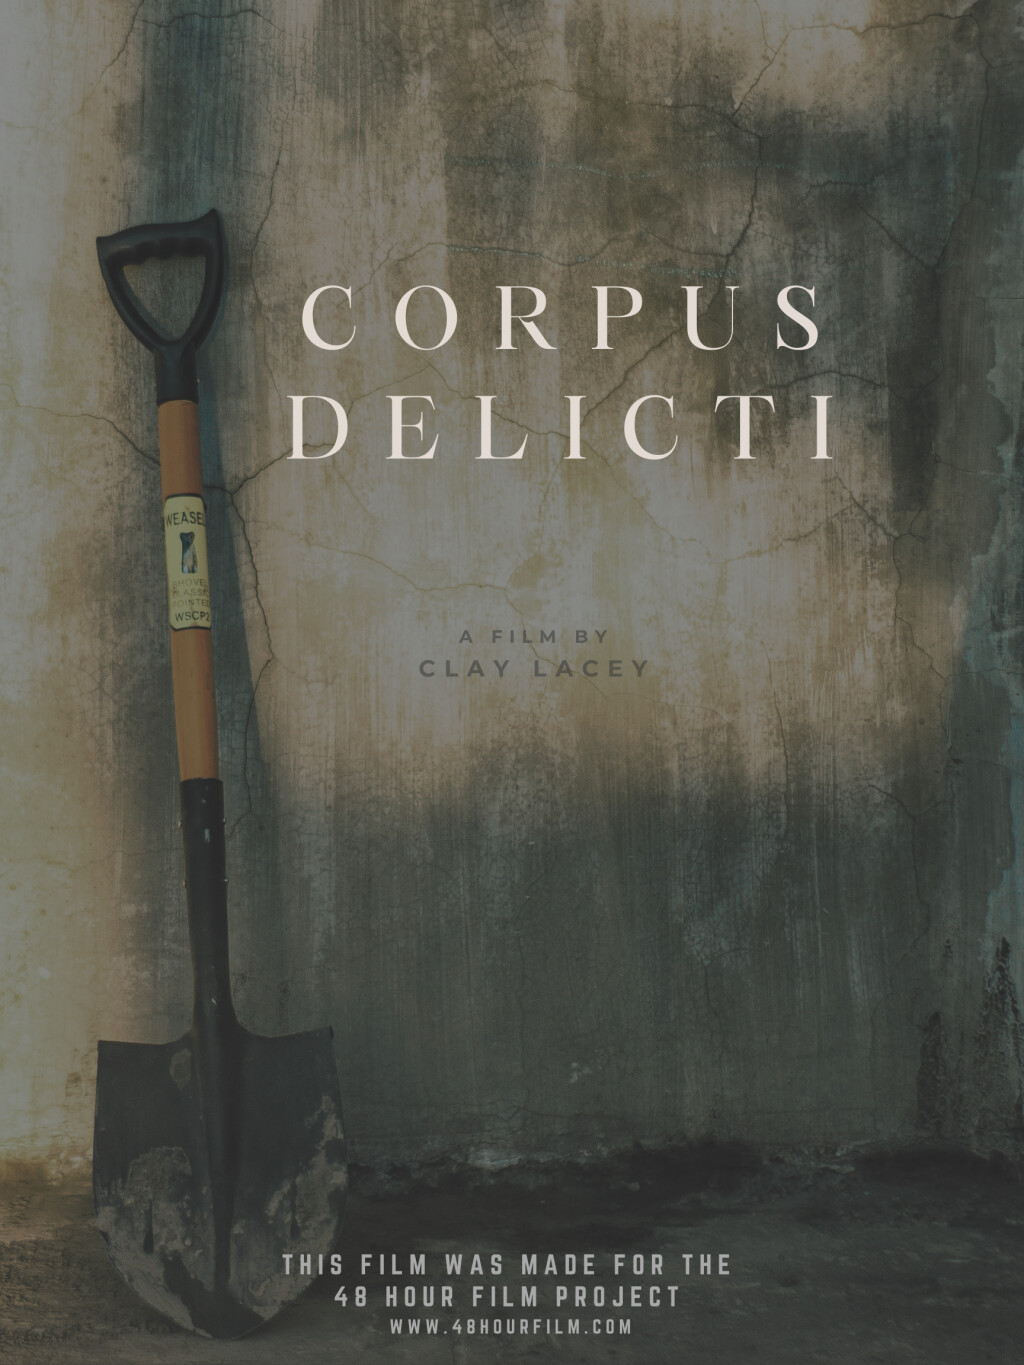 Filmposter for Corpus Delicti